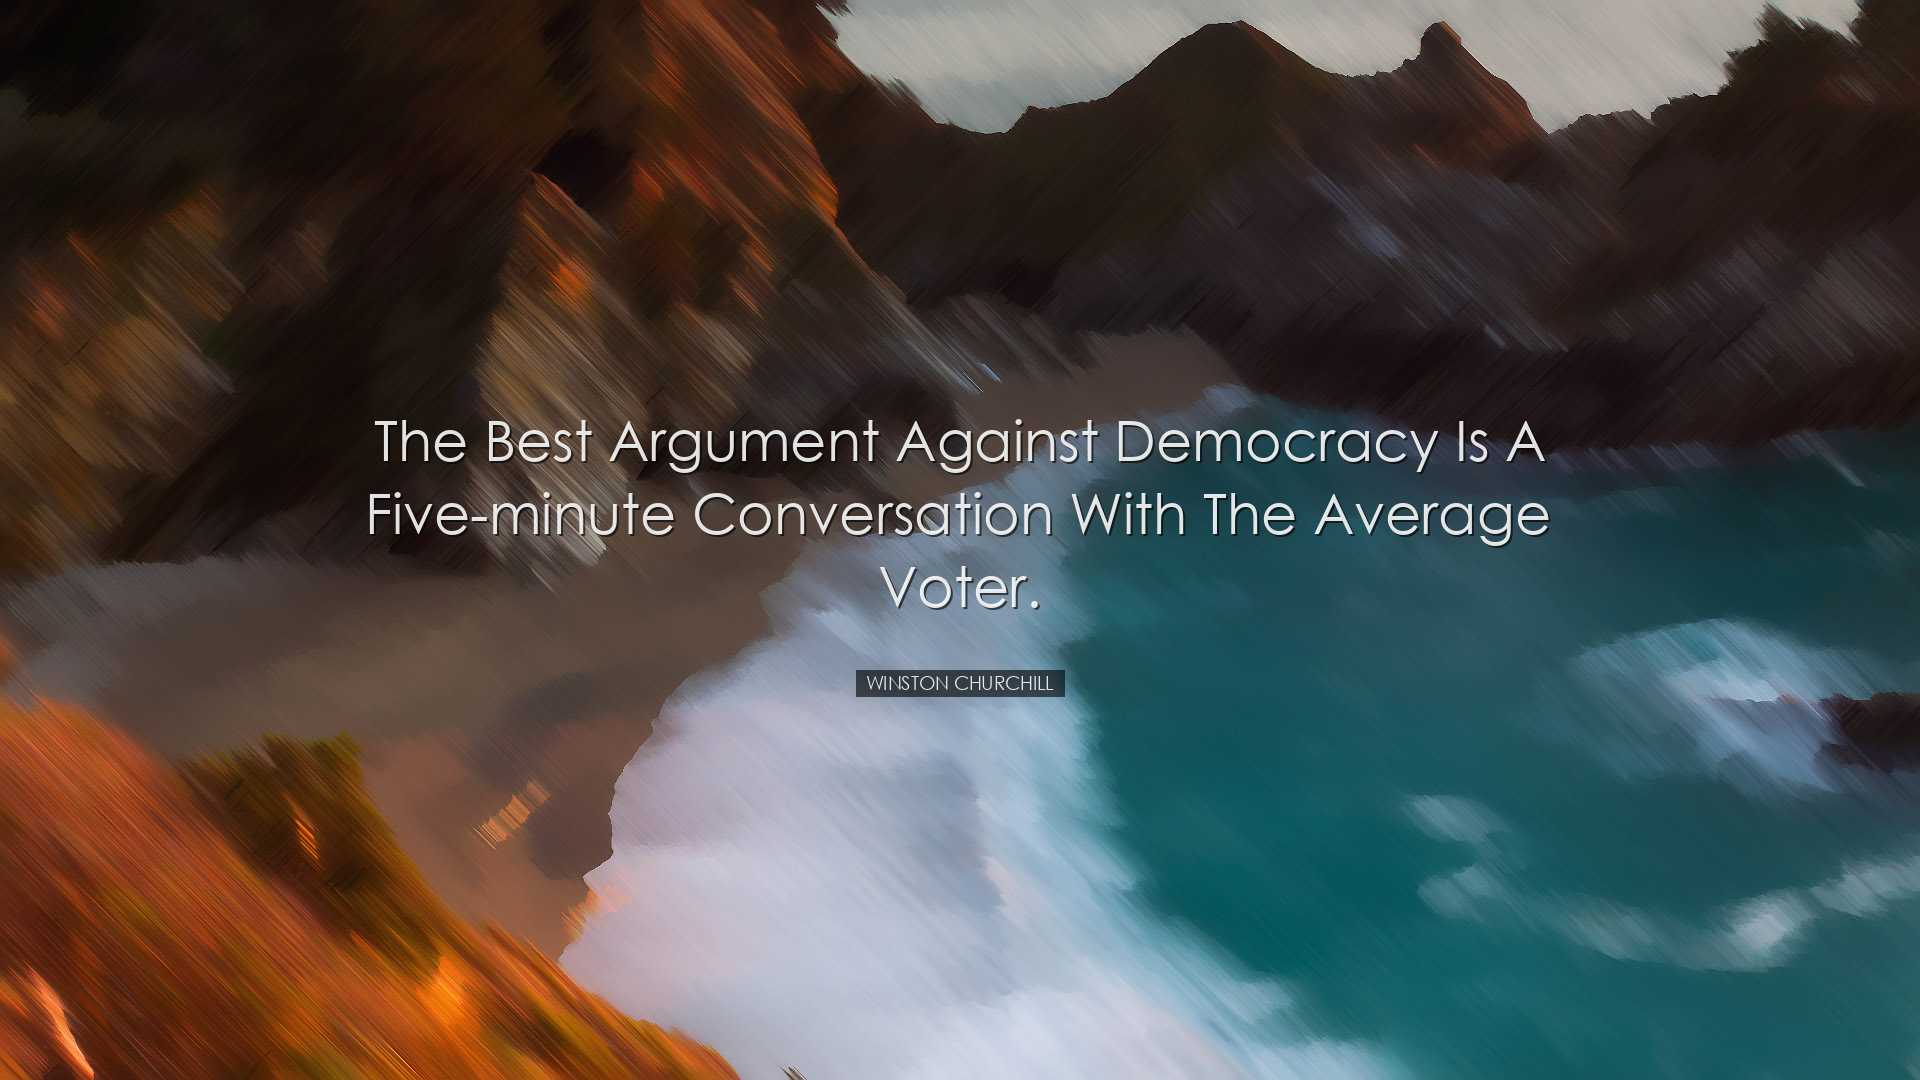 The best argument against democracy is a five-minute conversation